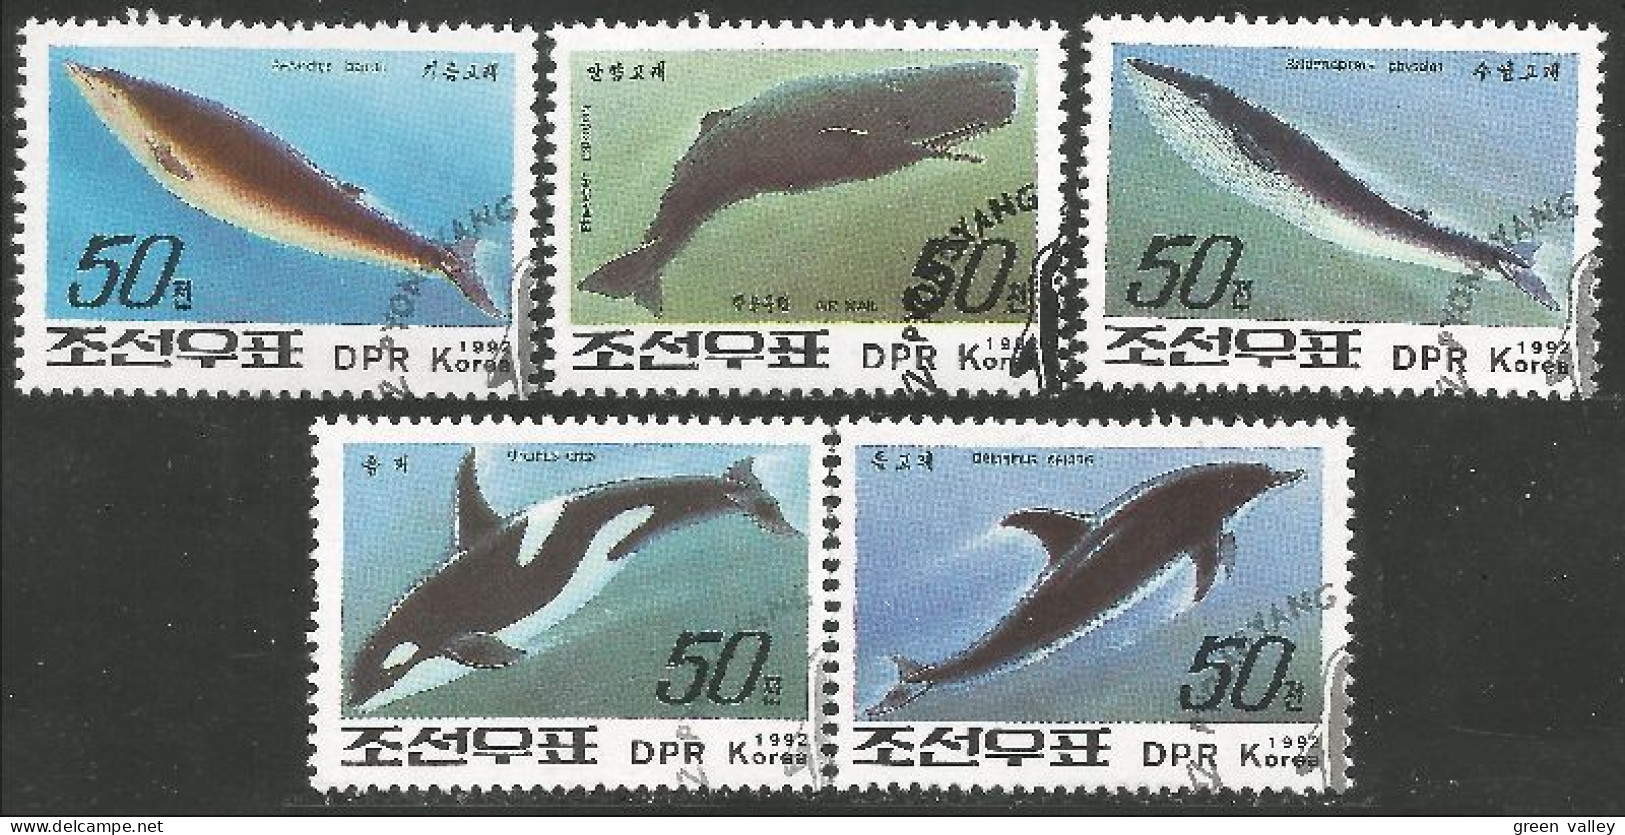 FI-32b Corée Baleine Dauphin Whale Dolphin Wal Delphin Balena Delfino - Wale